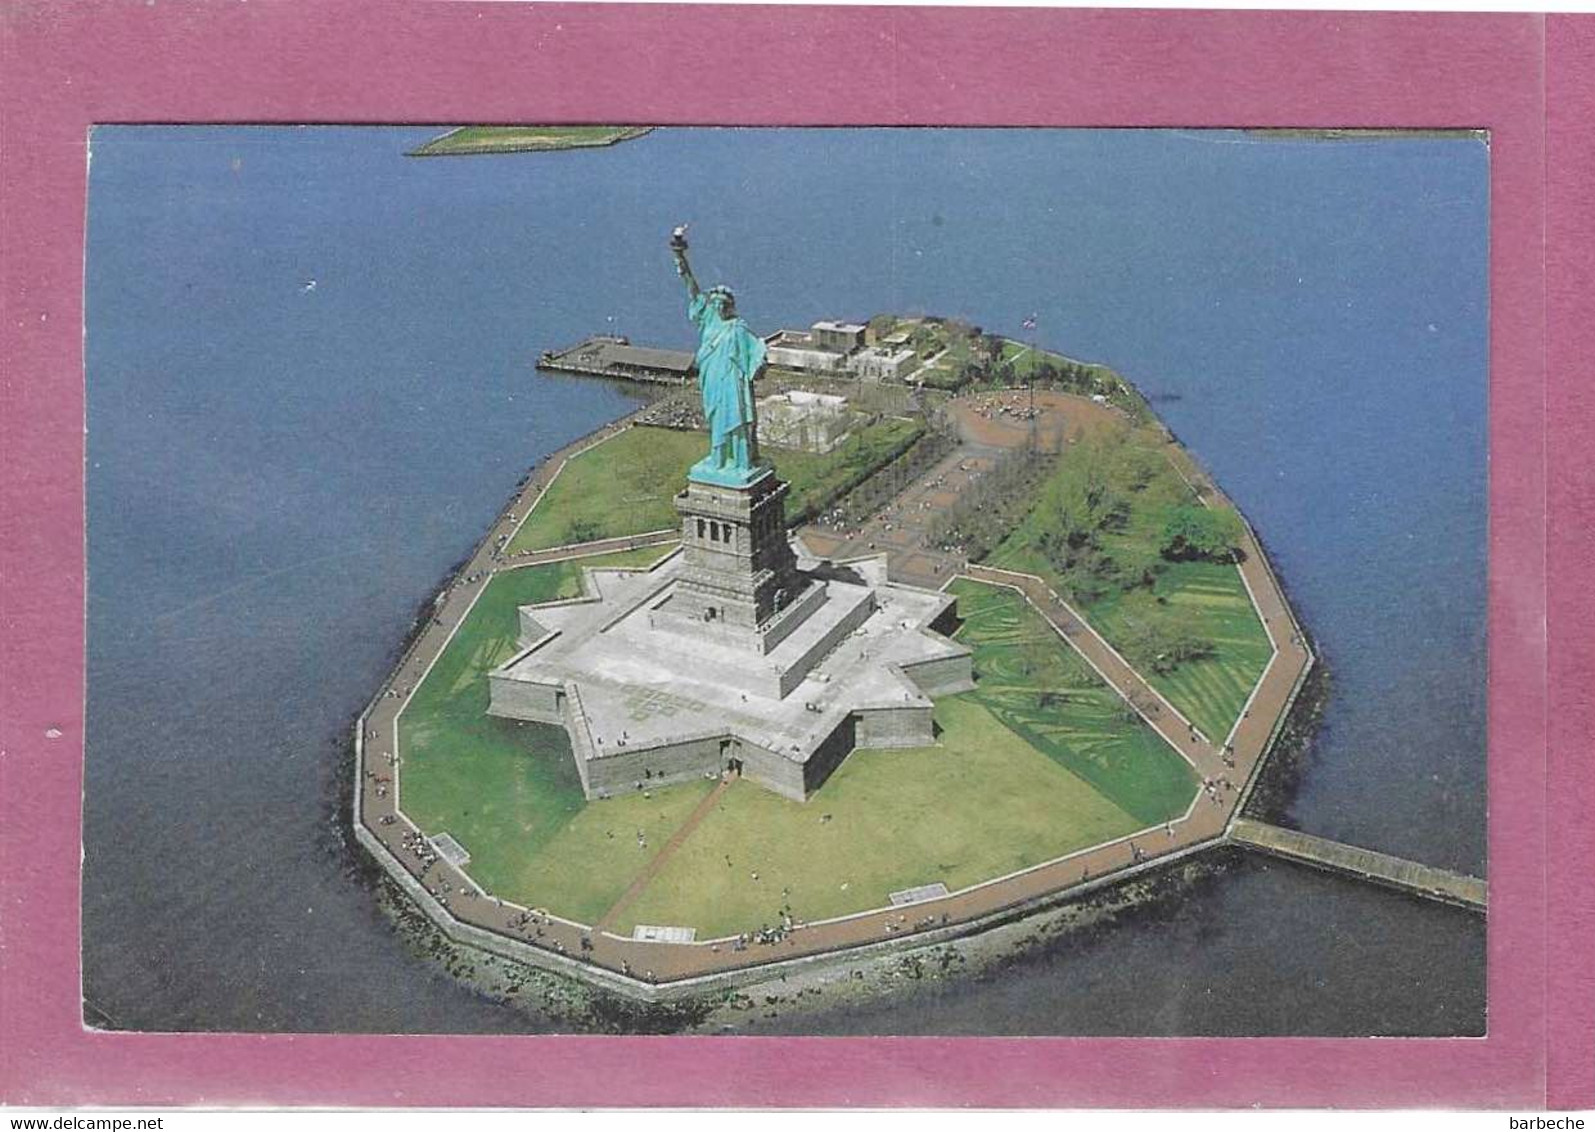 STATUE OF LIBERTY NATIONAL MONUMENT - Freiheitsstatue